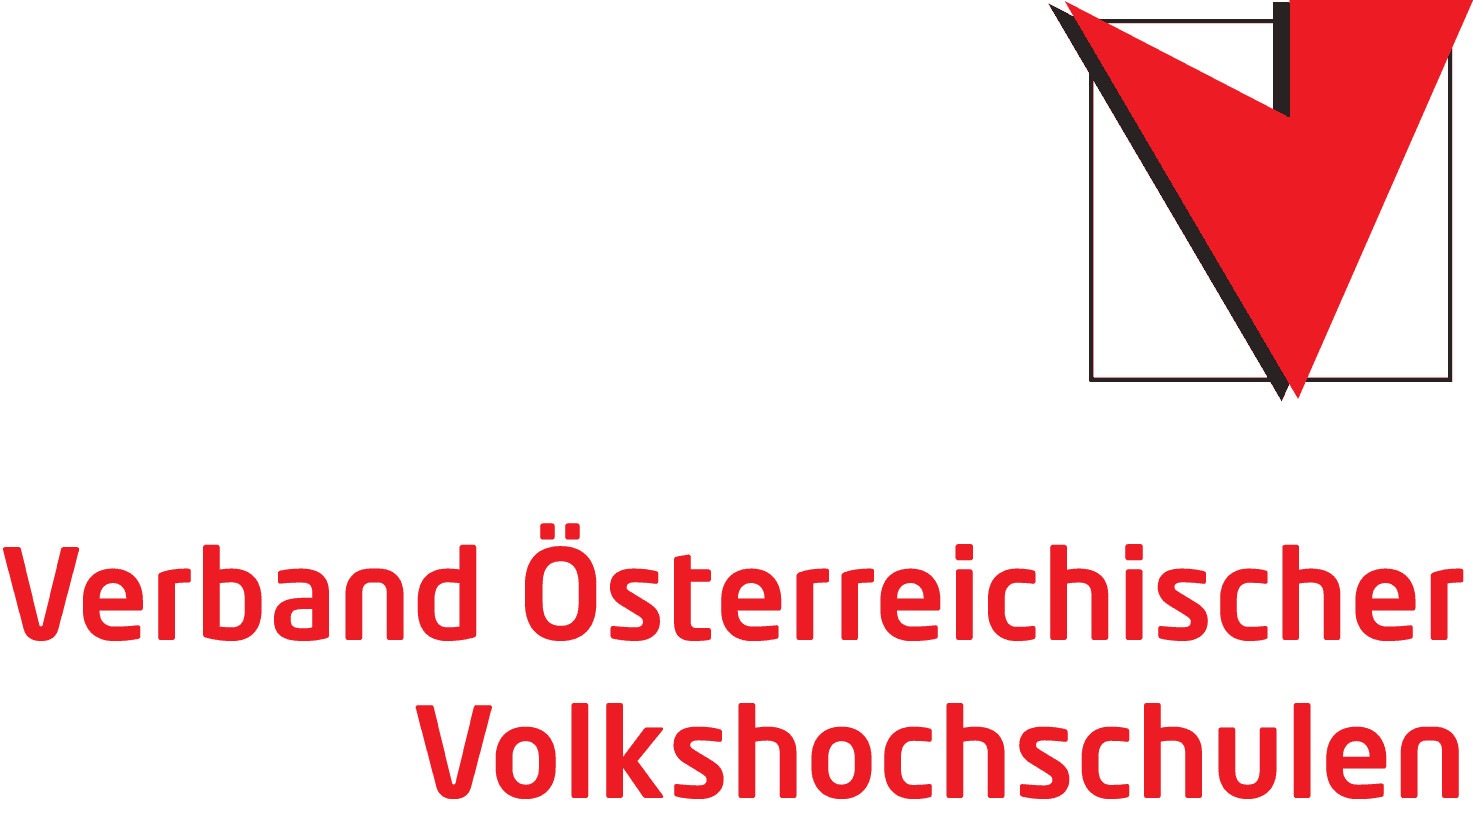 Logo VÖV